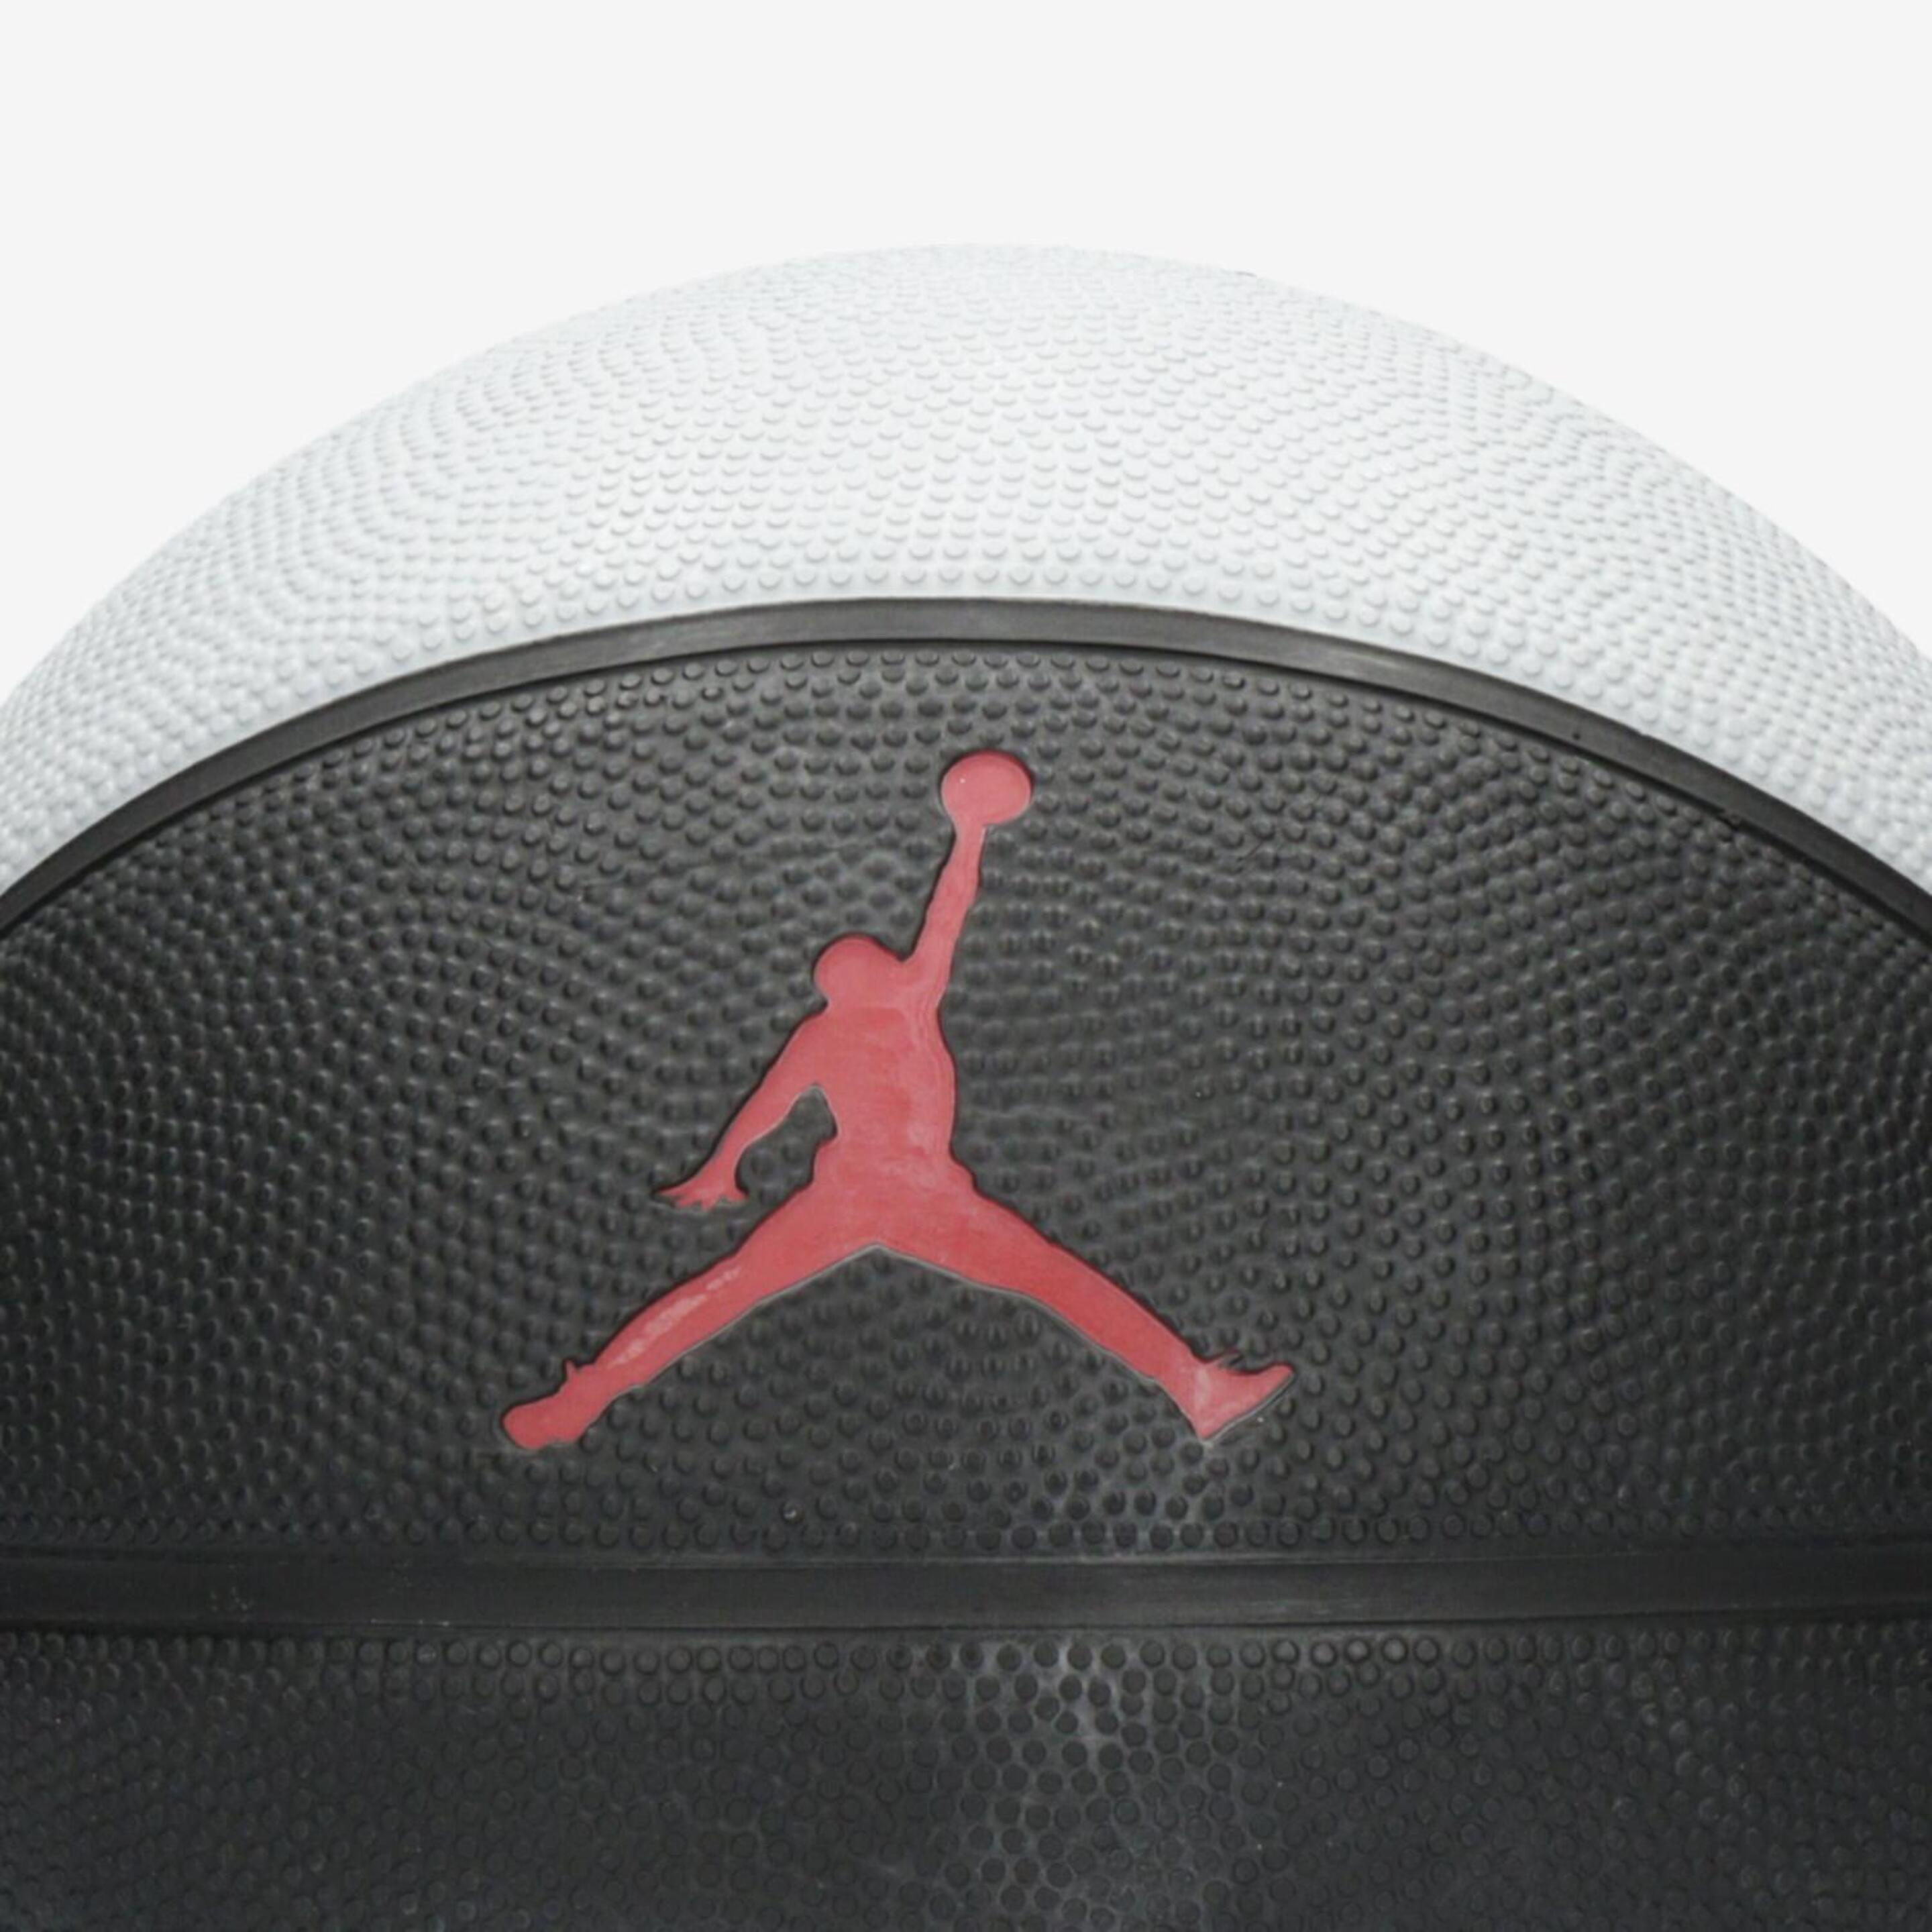 Miinibalon Nike Jordan